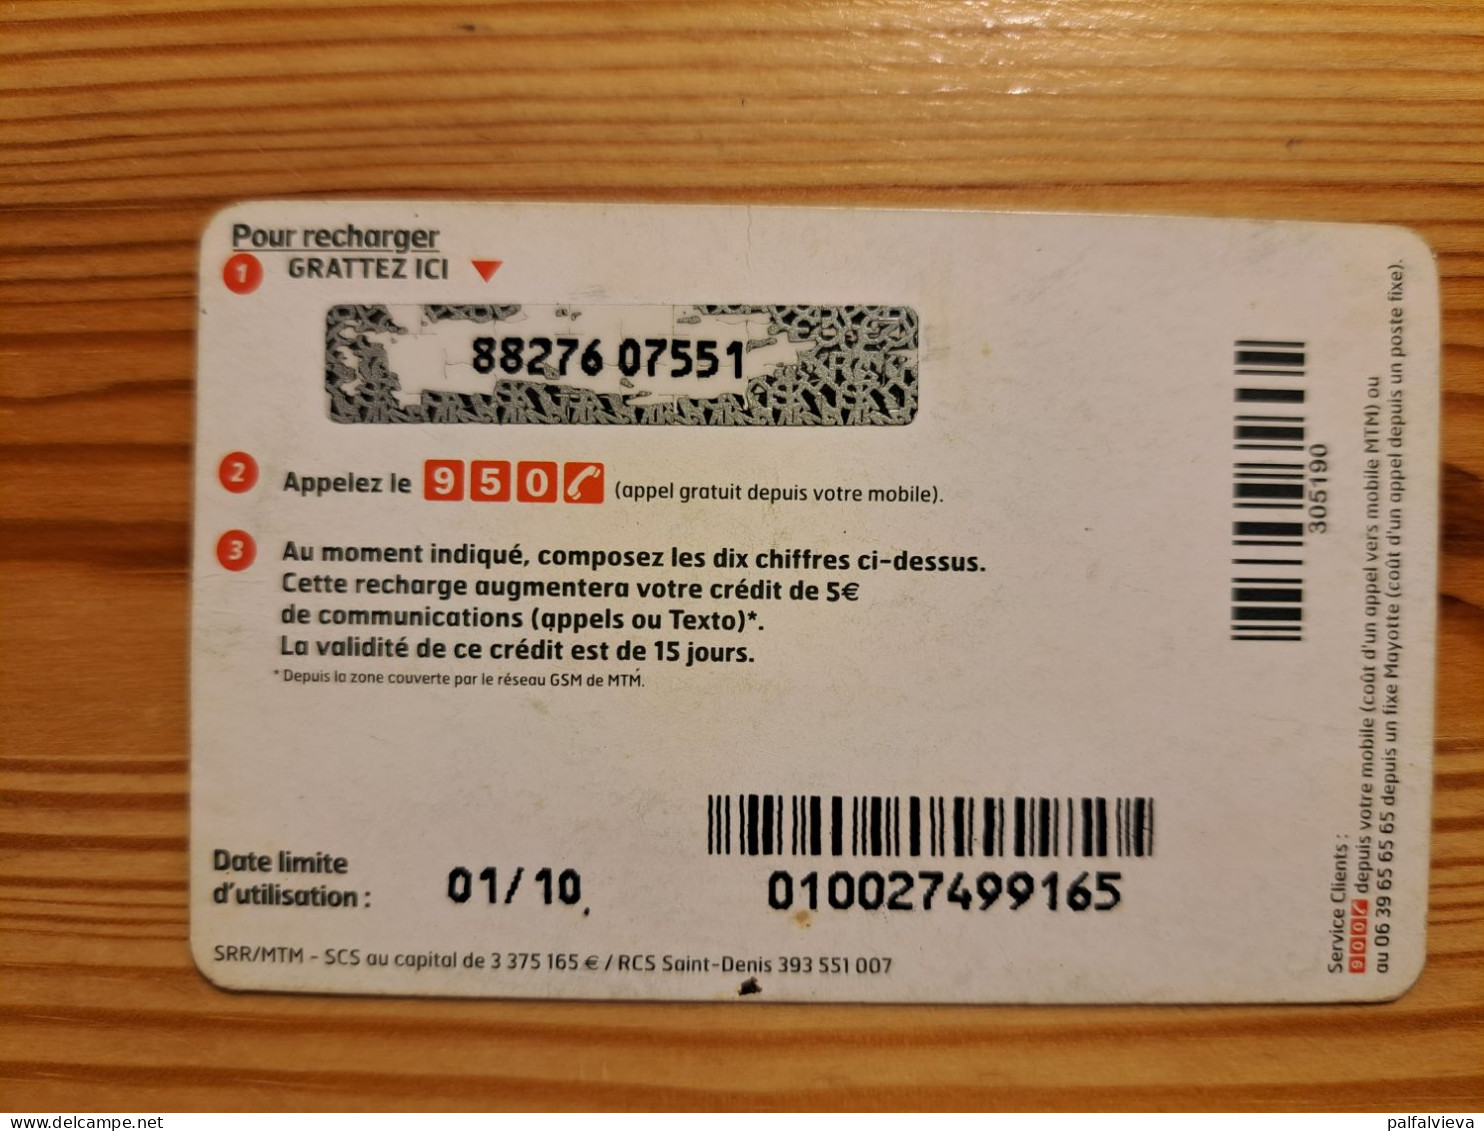 Prepaid Phonecard France, Mayotte, SFR - Nachladekarten (Refill)